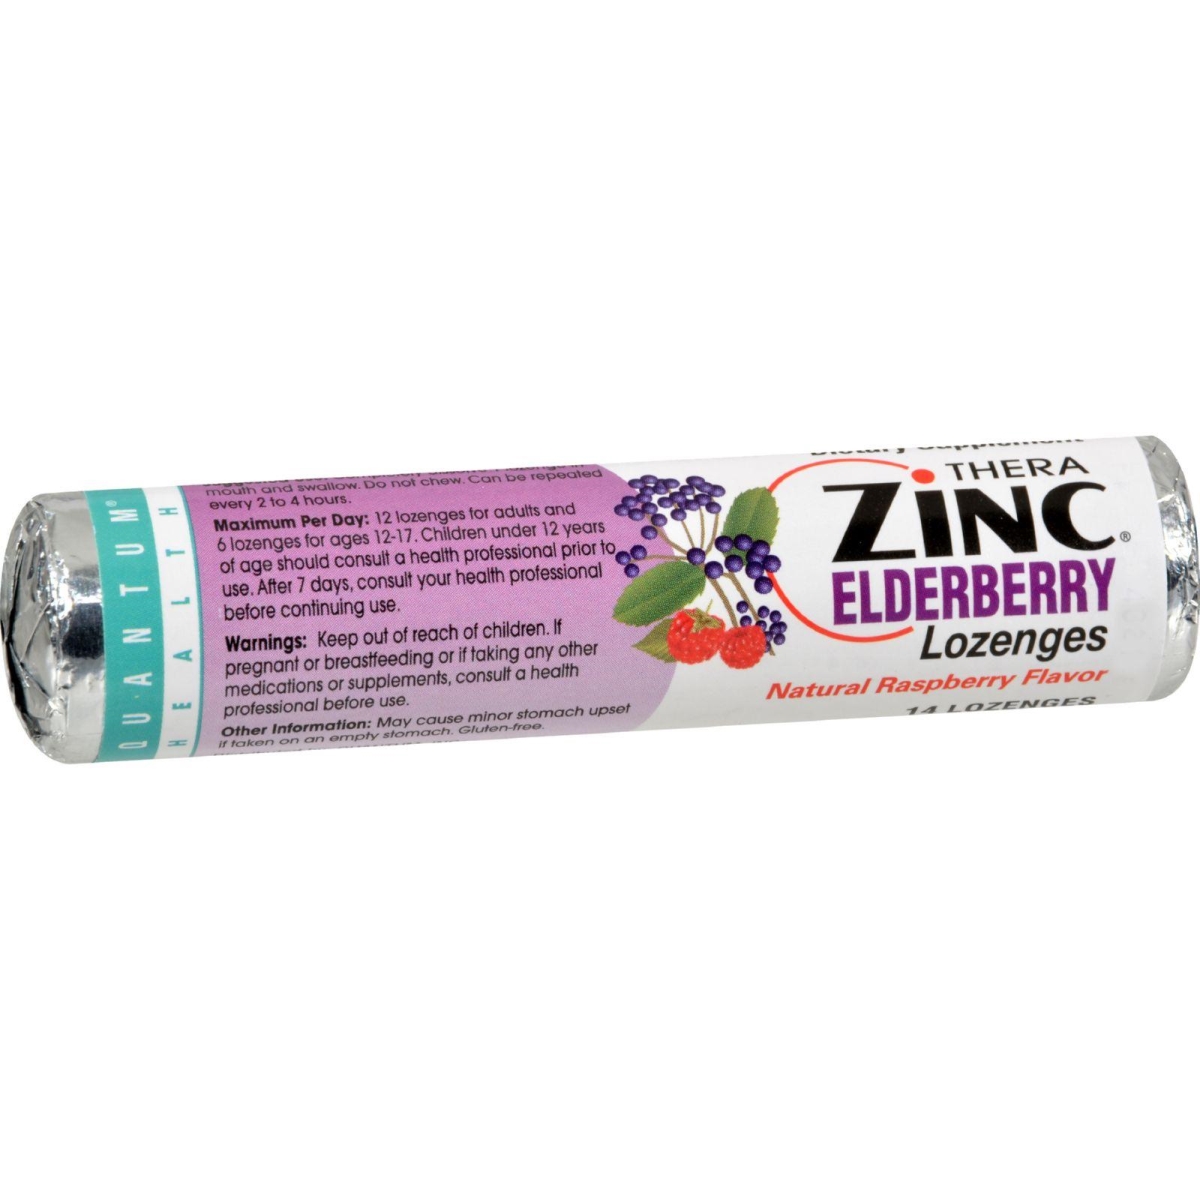 Hg0252767 1.2 Oz Zinc Lozenges Elderberry Raspberry, Case Of 12